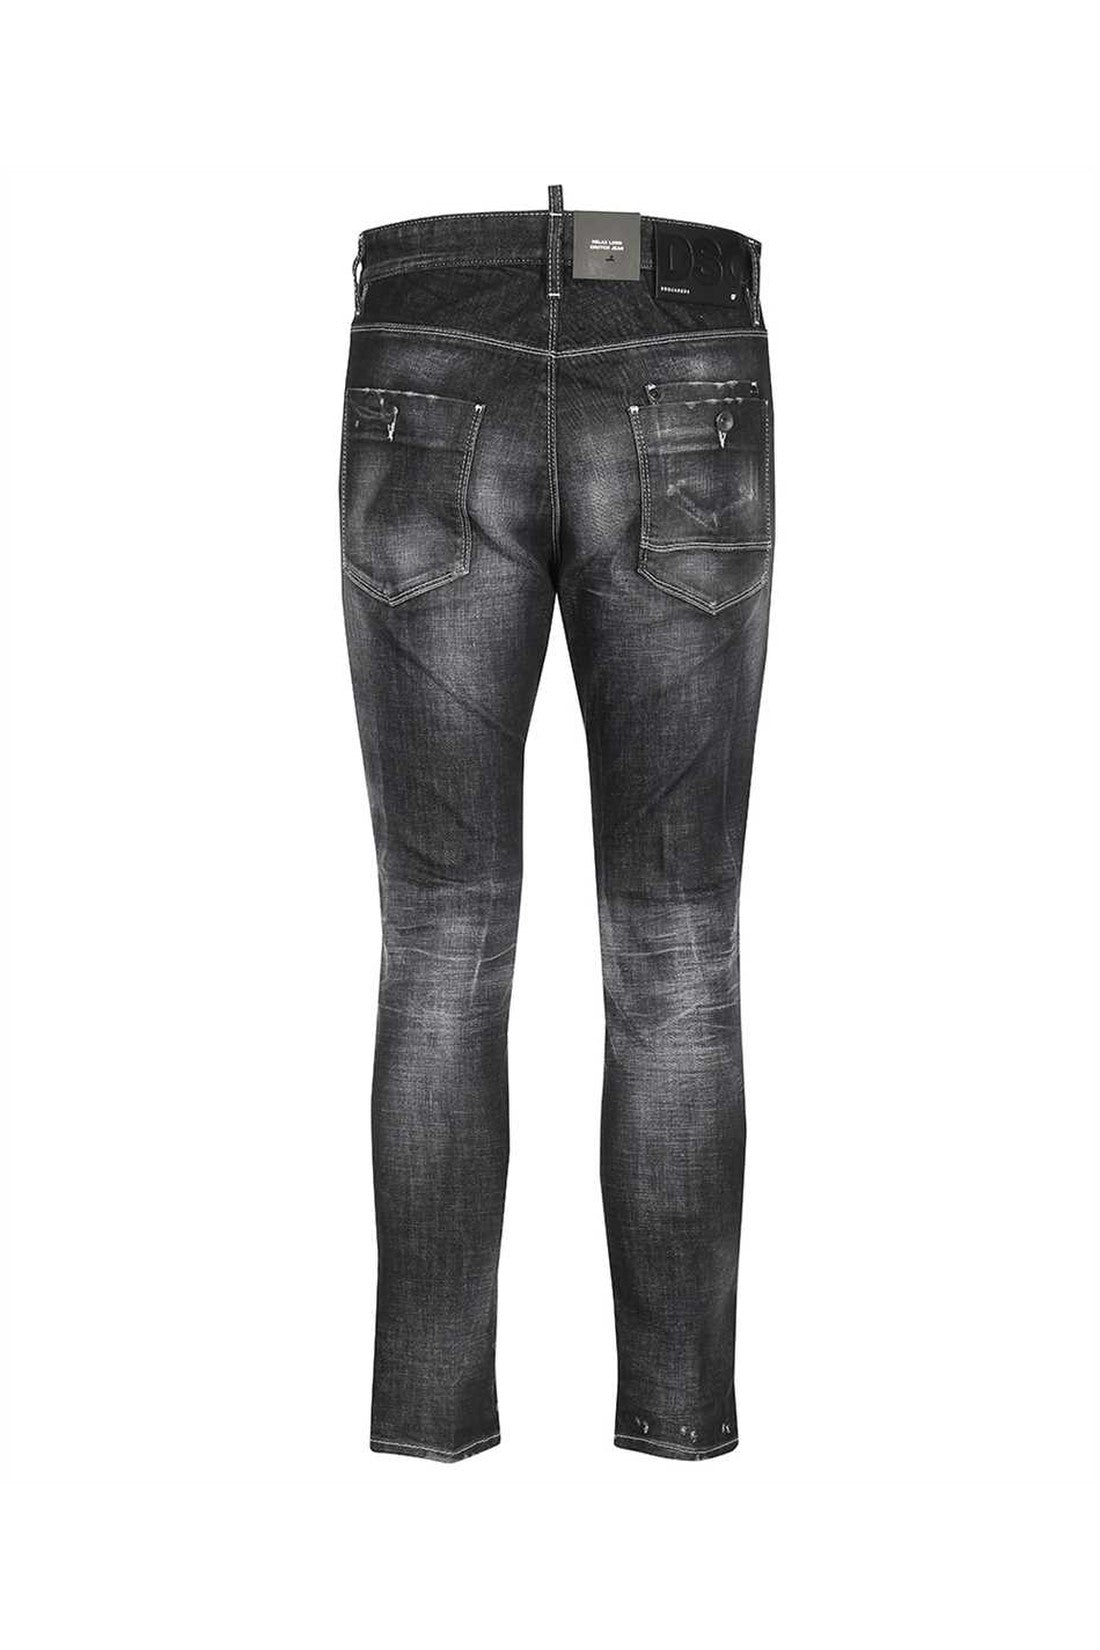 Dsquared2-OUTLET-SALE-Relax Long Crunch stretch cotton jeans-ARCHIVIST